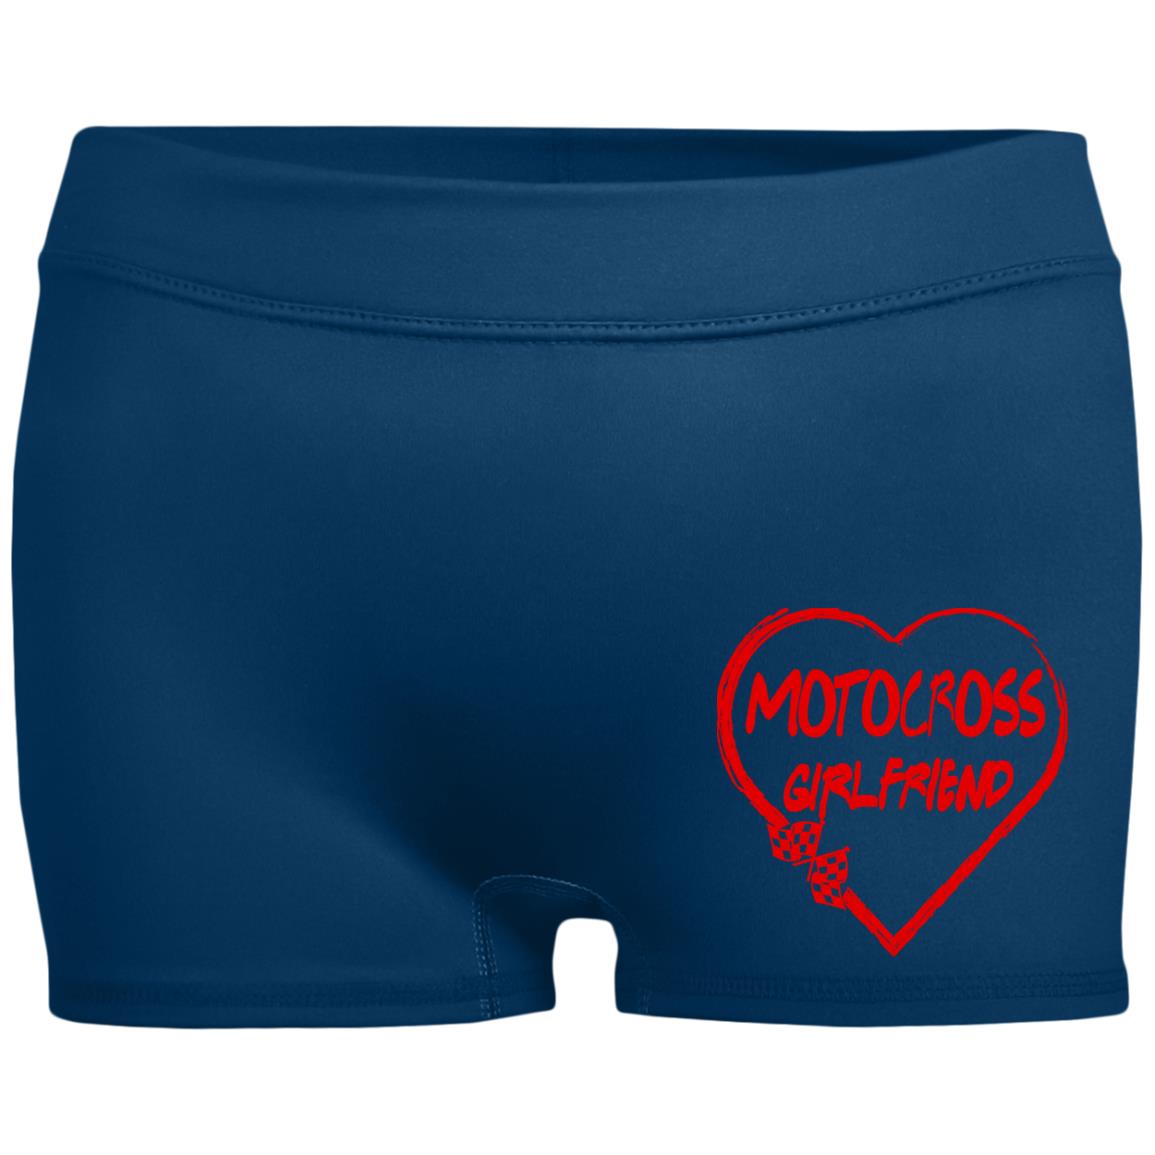 Motocross Girlfriend Heart Ladies' Fitted Moisture-Wicking 2.5 inch Inseam Shorts